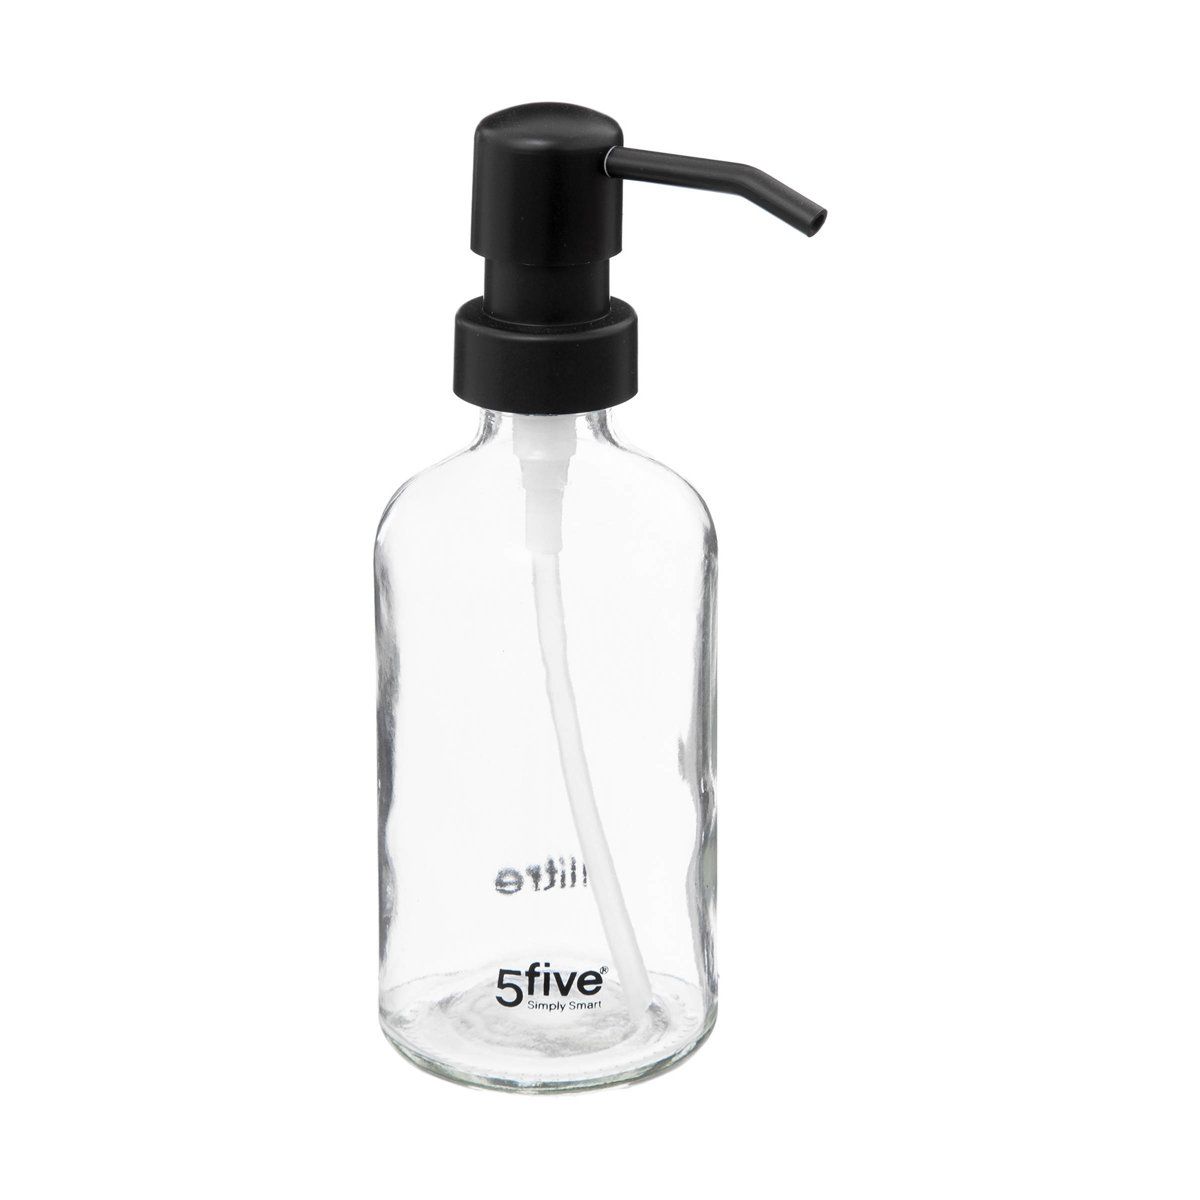 5five Simply Smart Dávkovač mýdla, skleněný, 250 ml - EDAXO.CZ s.r.o.